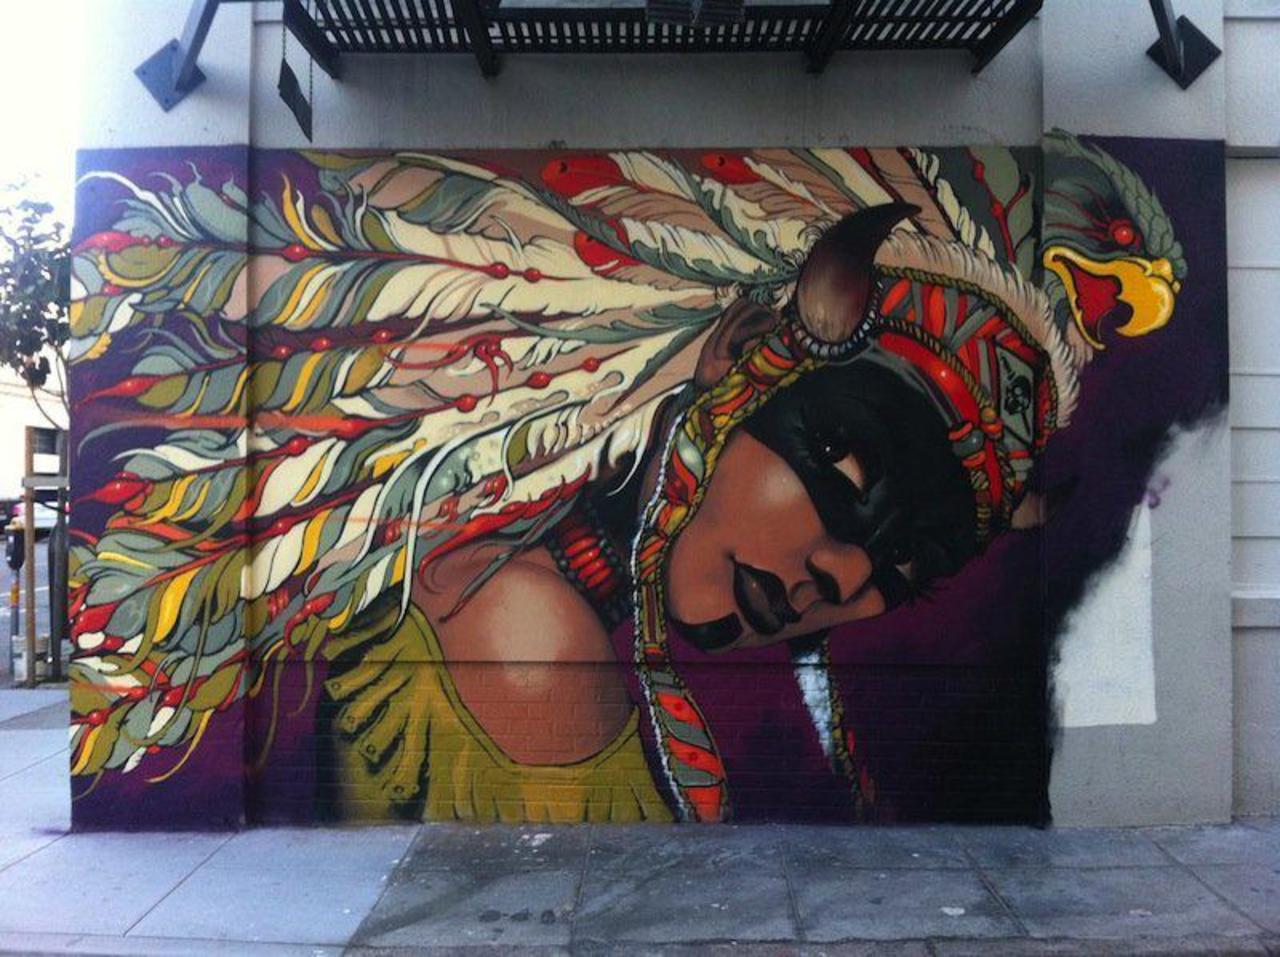 War bonnet. Find more amazing #graffiti in our gallery: http://bit.ly/1GPAOAT #mural #art http://t.co/IrX8IweeQt